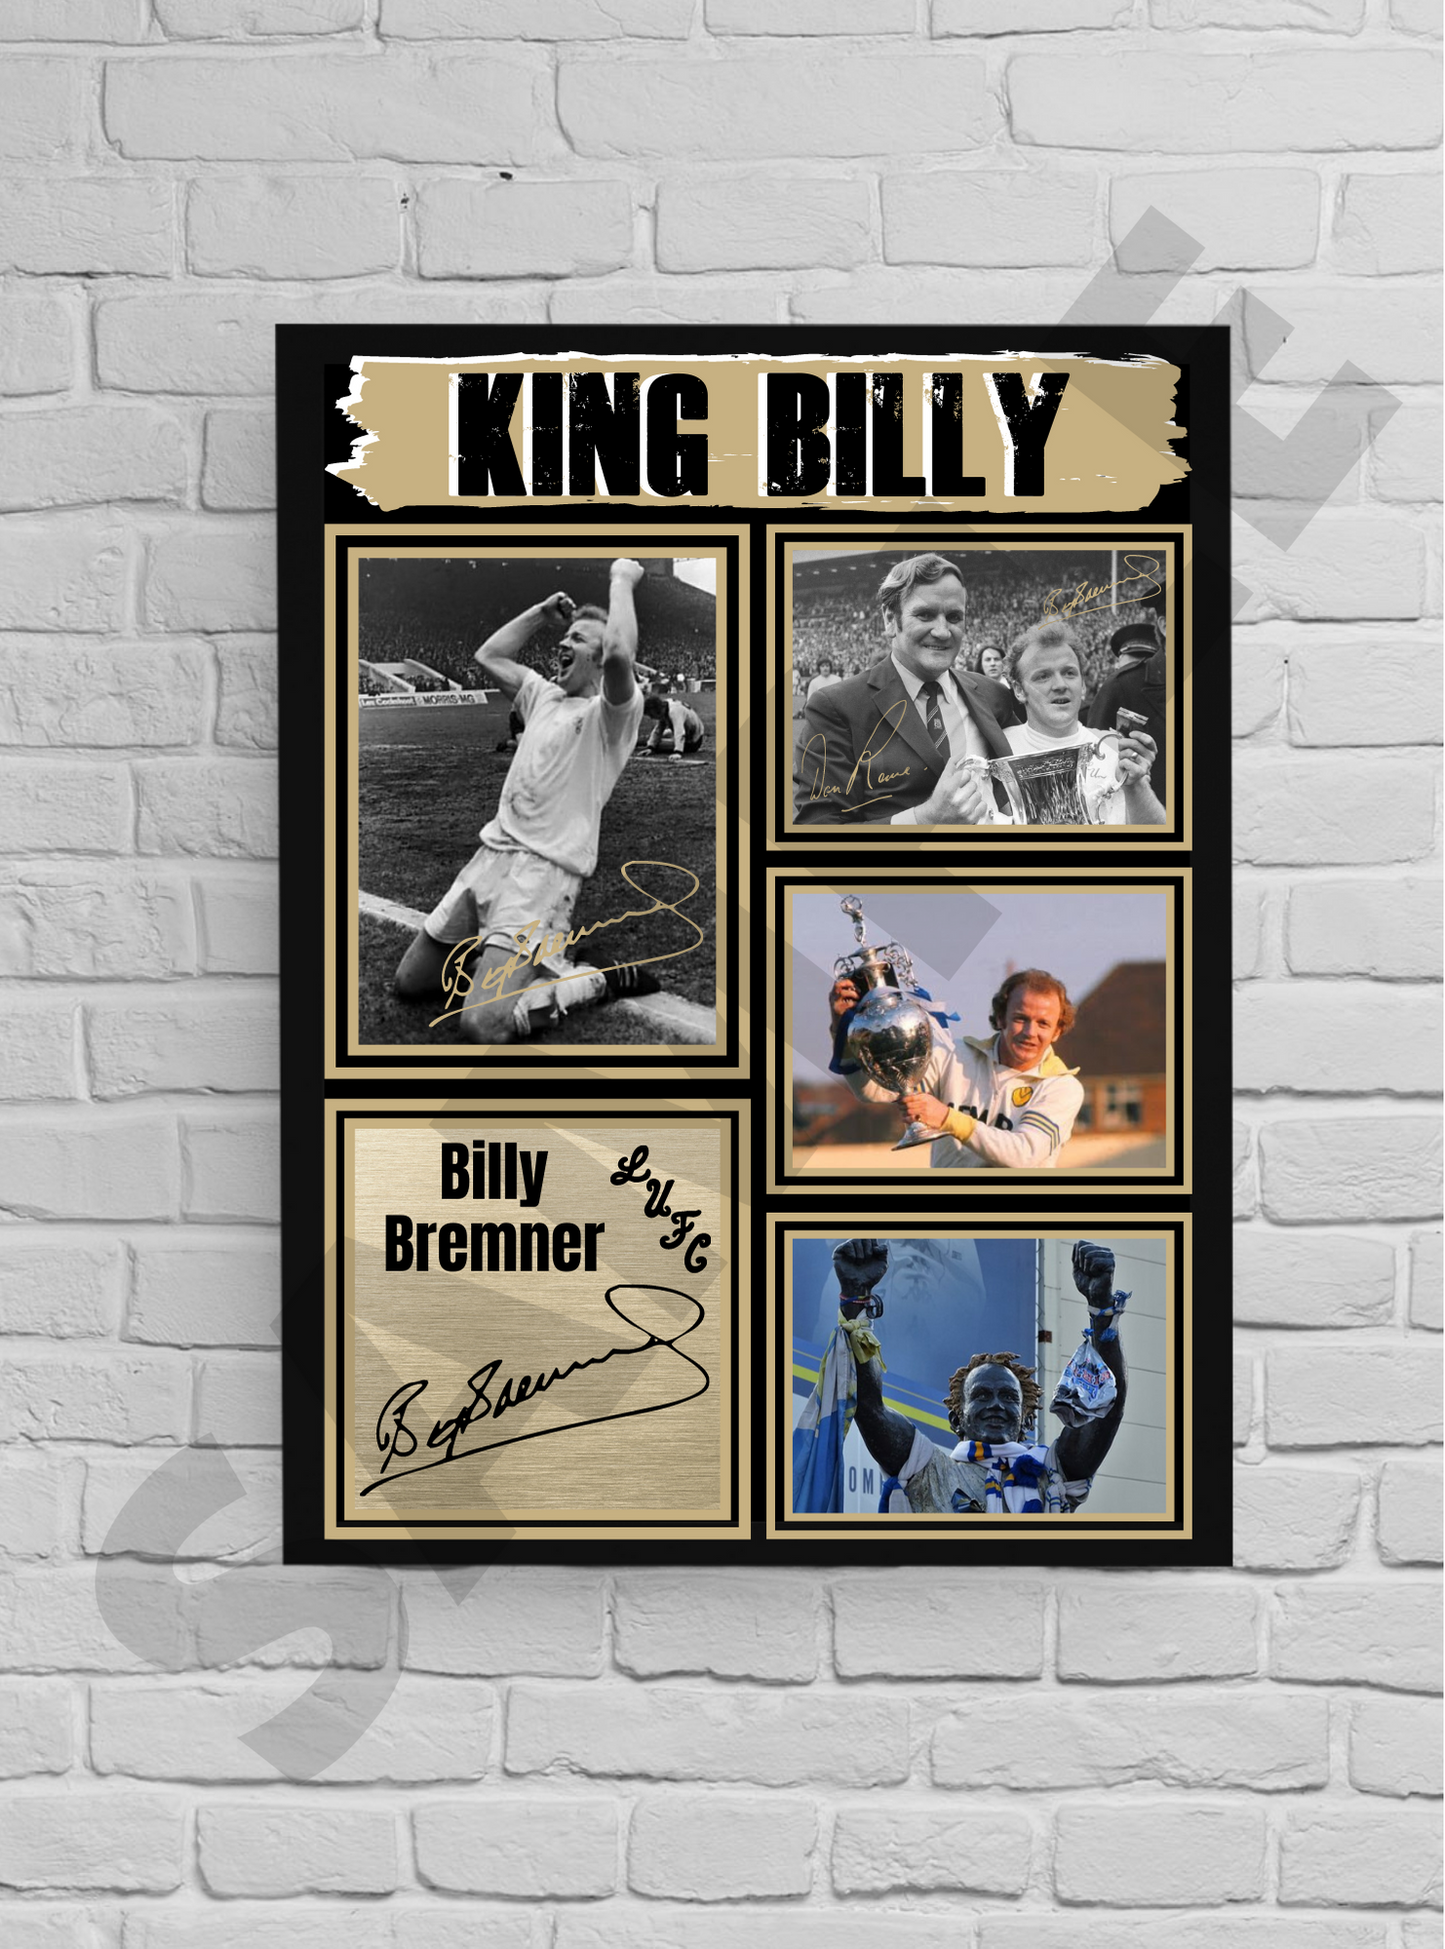 Billy Bremner 2 Leeds United Football Icon Collectable/Memorabilia print